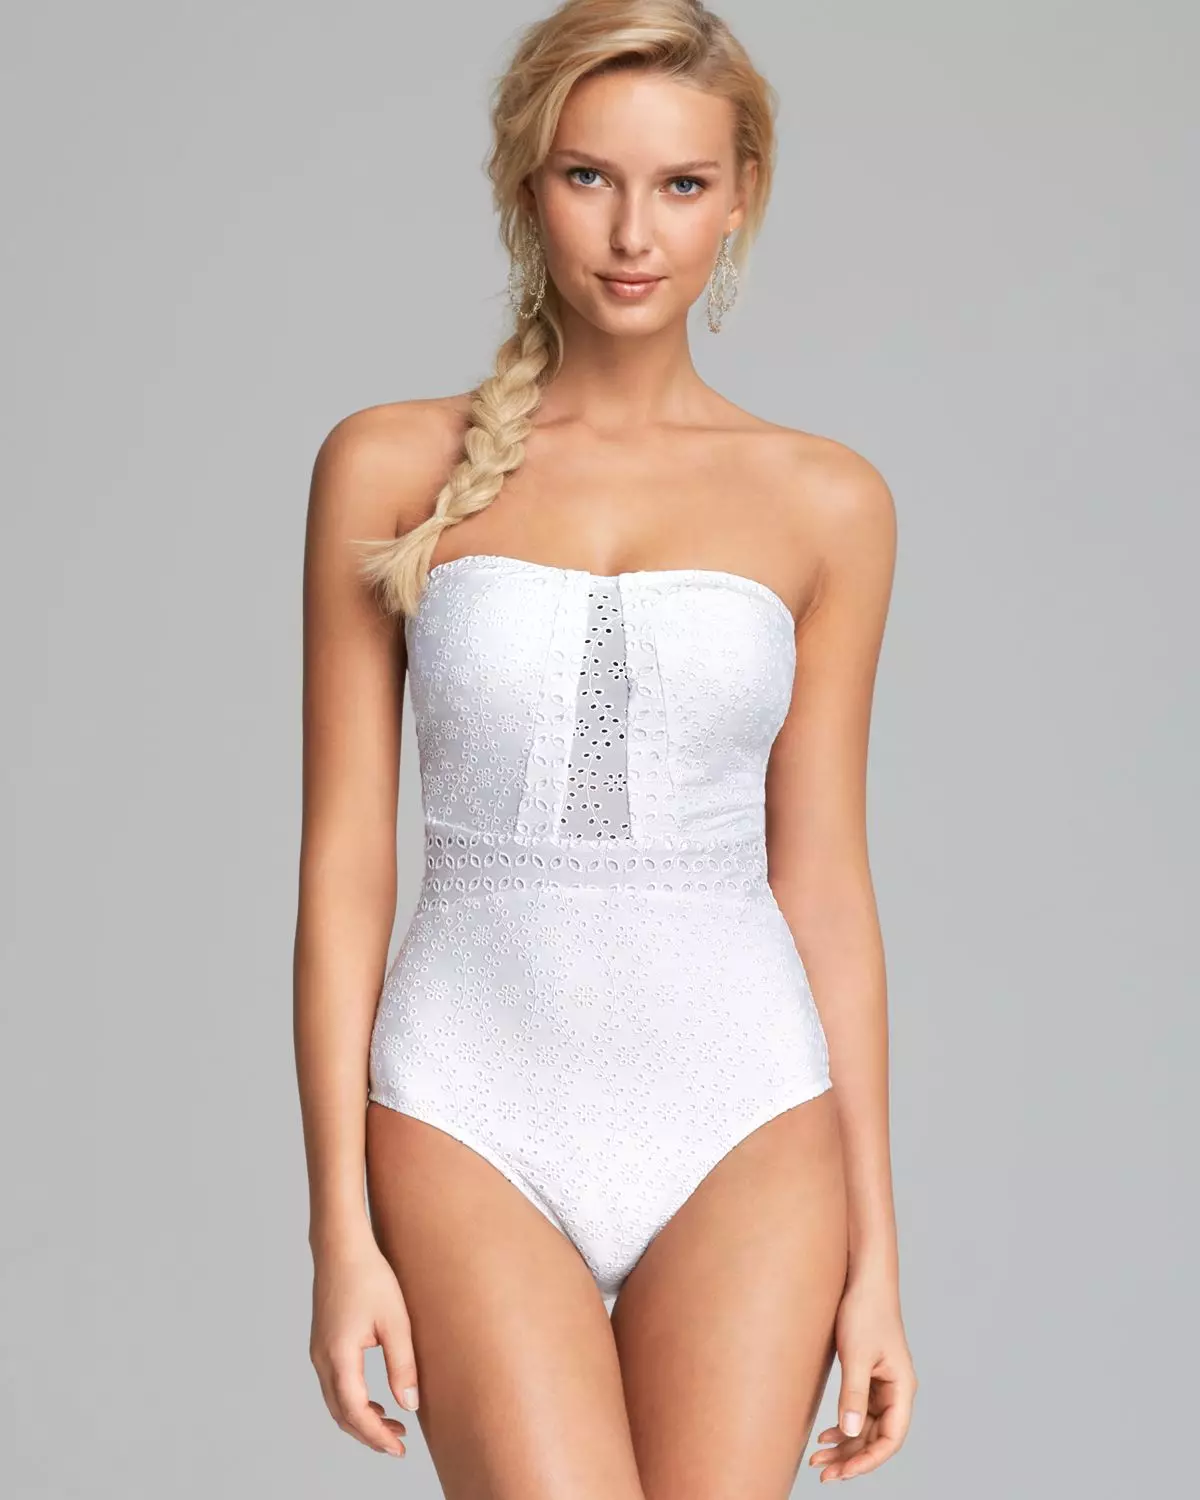 White kupaći kostim (73 fotografije): prekrasne ženske modele, jar-bijeli kupaći kostim, modeli dot polka 1557_8